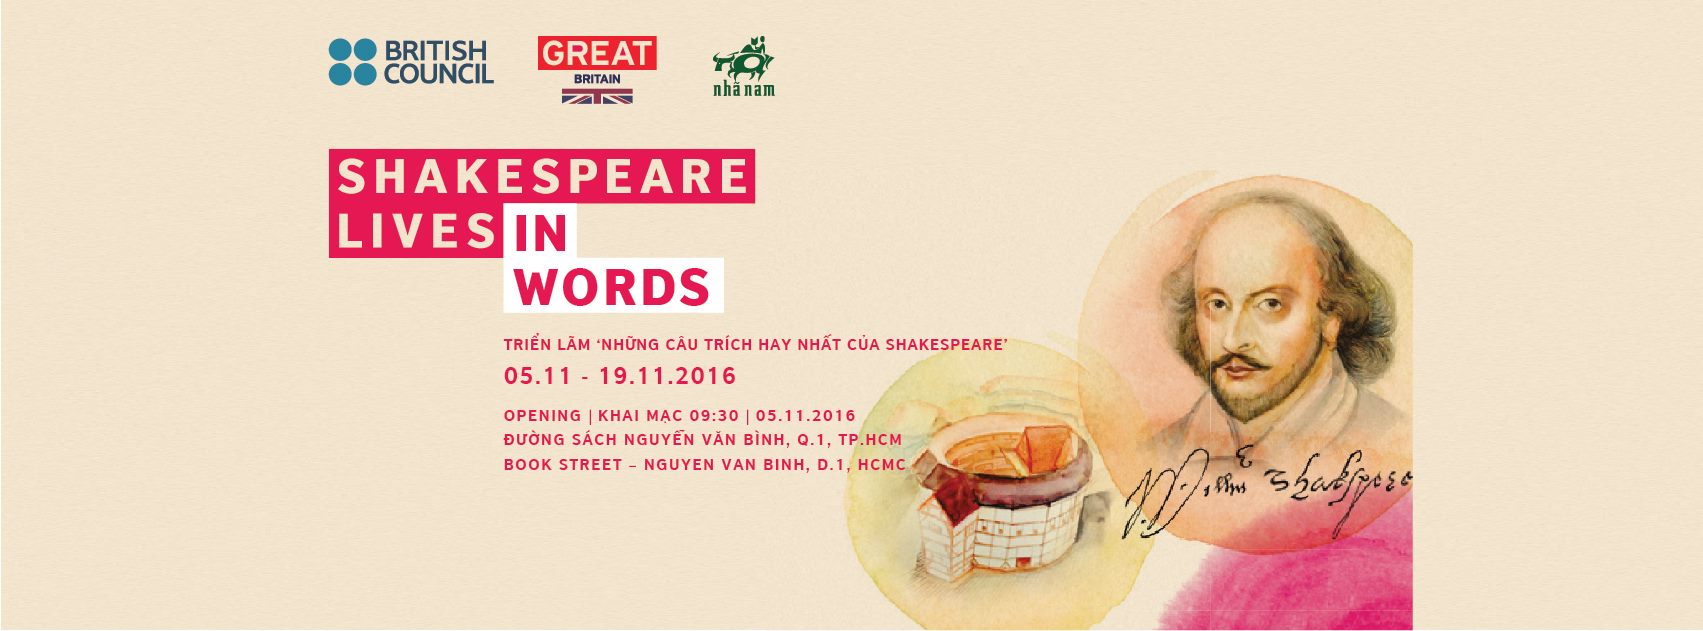 SHAKESPEARE LIVES IN WORDS: Triển lãm “Những câu trích hay của Shakespeare”